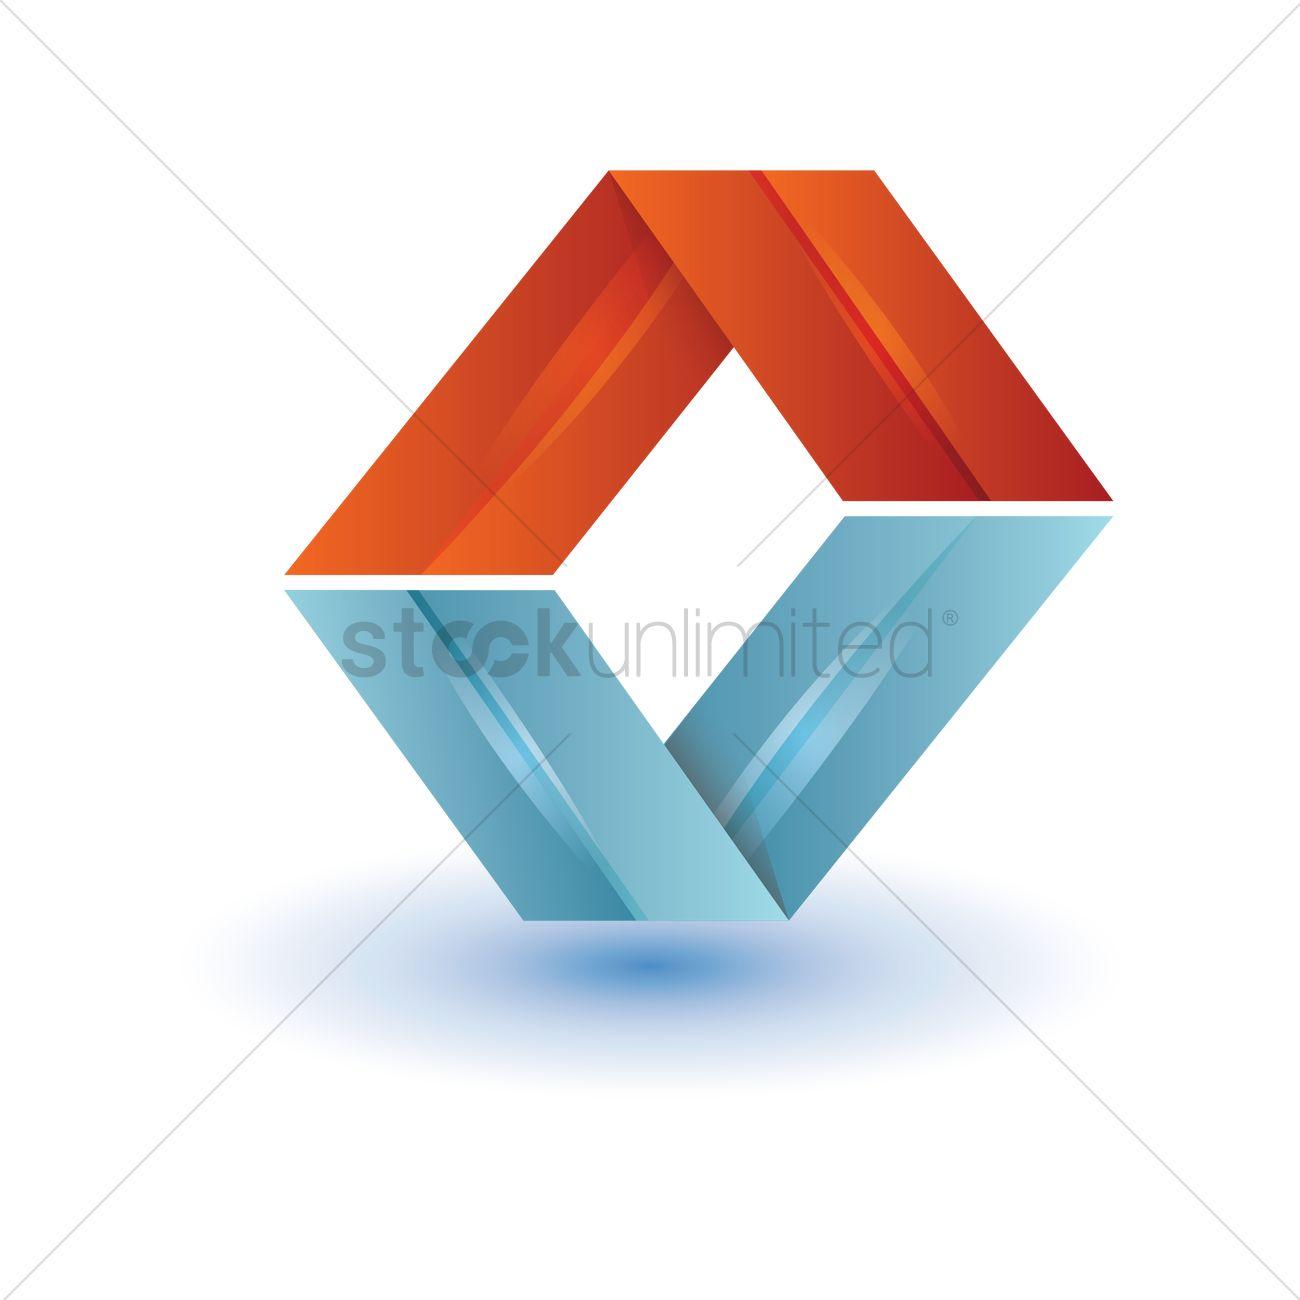 Rhombus Logo - Rhombus logo element Vector Image - 1938816 | StockUnlimited